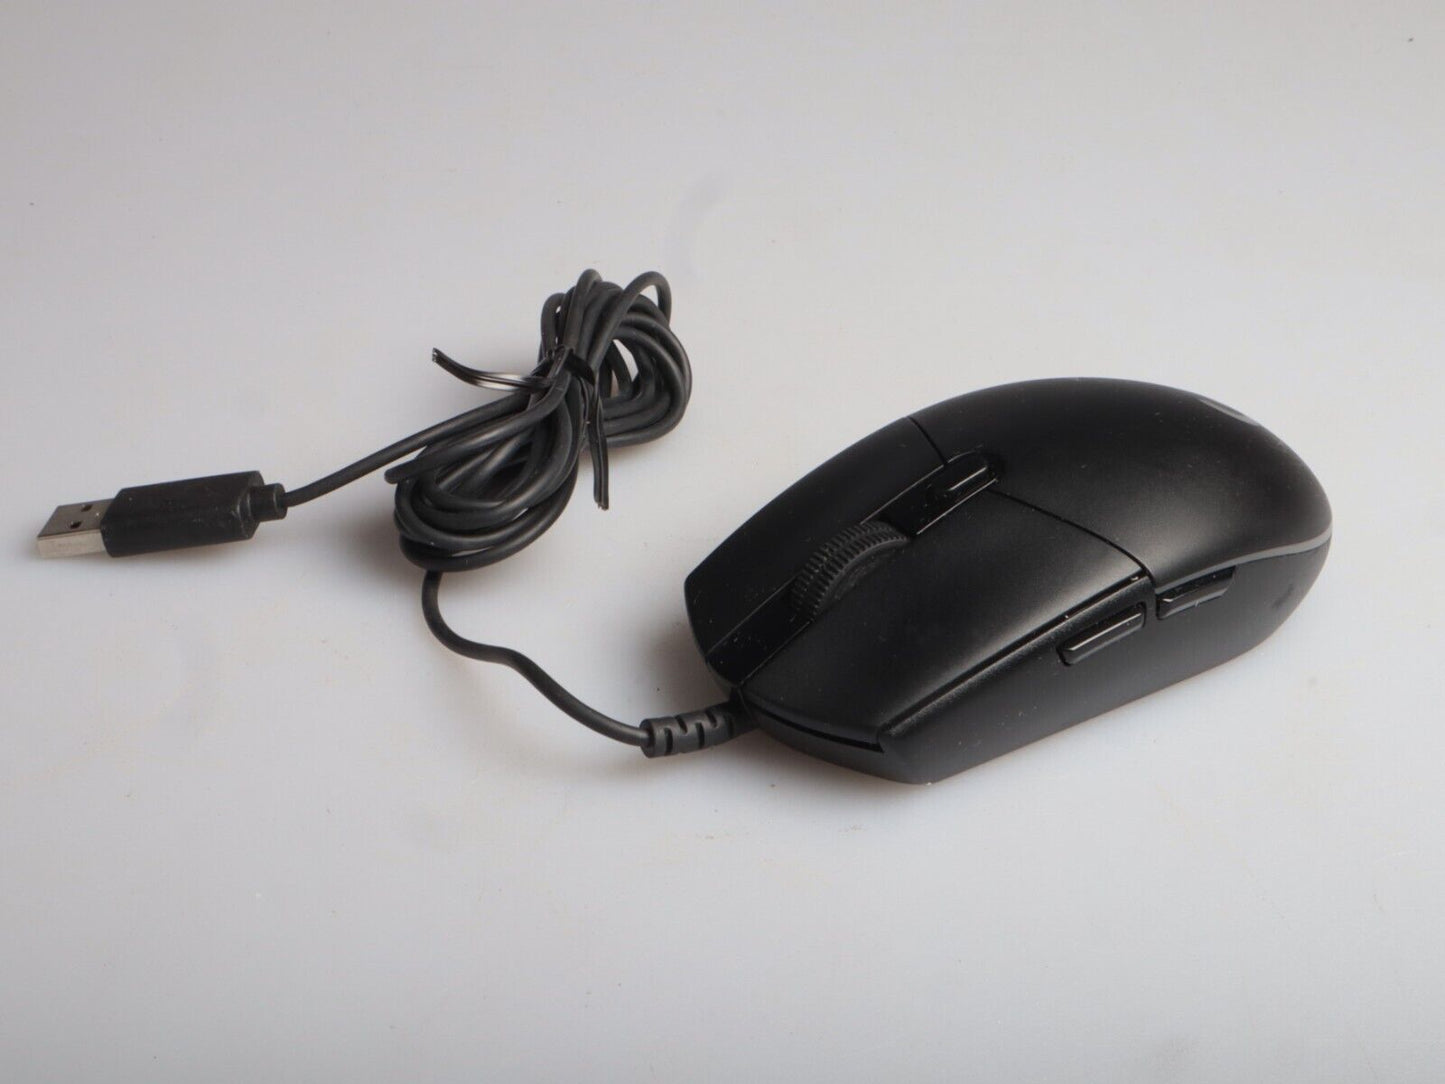 Logitech G203 LIGHTSYNC | Gaming Mouse RGB Lighting | Black | Boxed